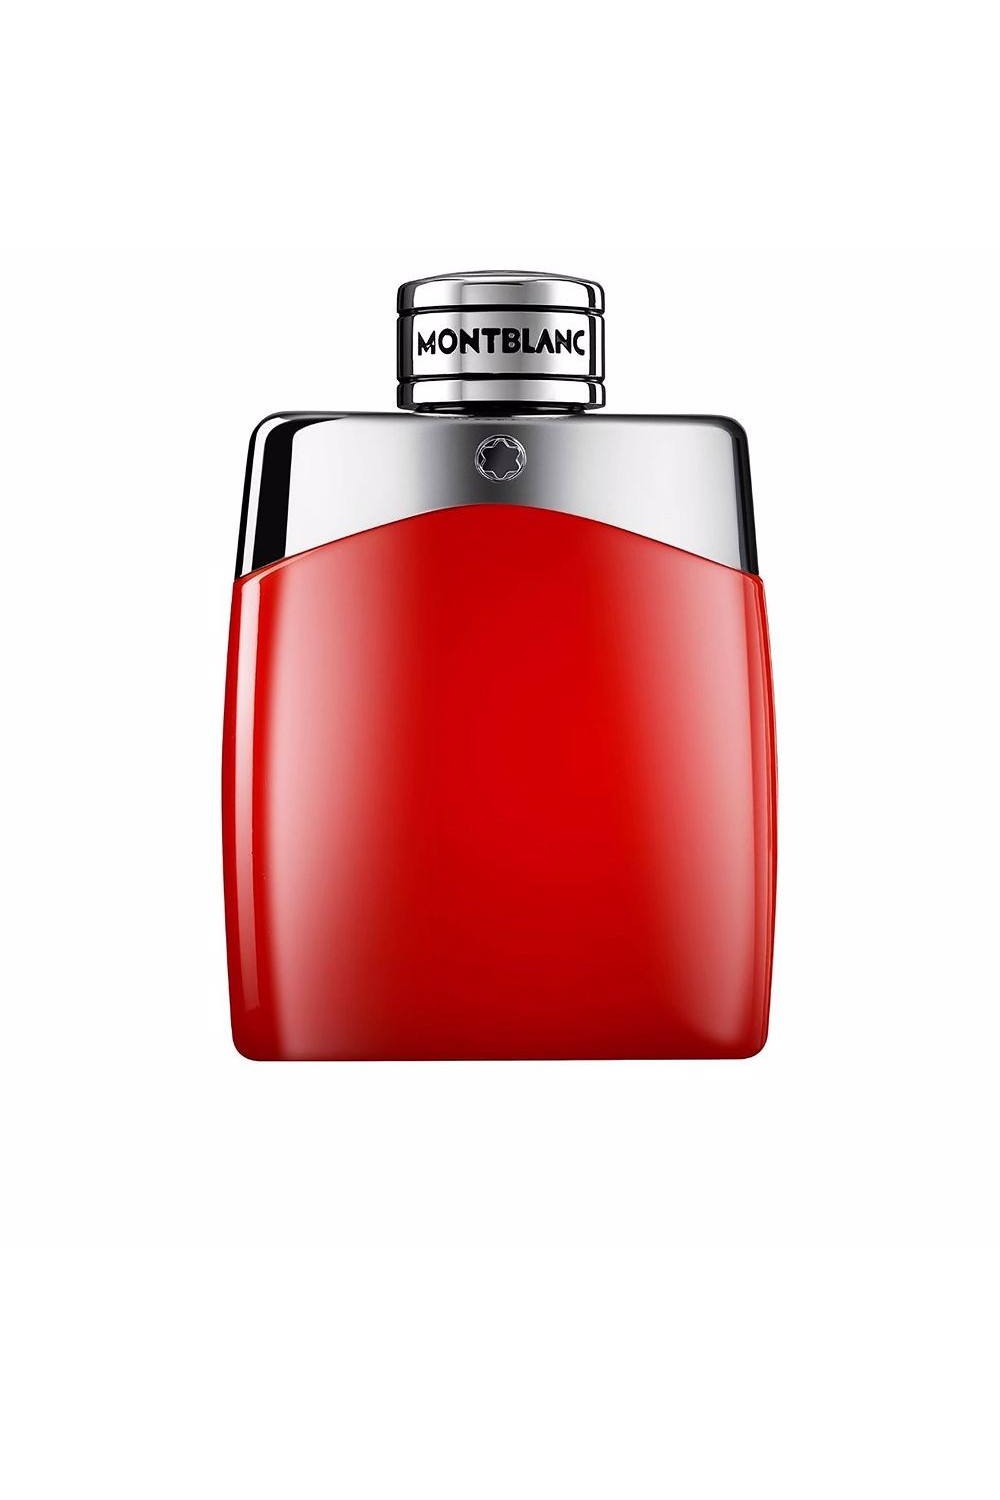 Montblanc Legend Red Eau de Perfume Spray 100ml